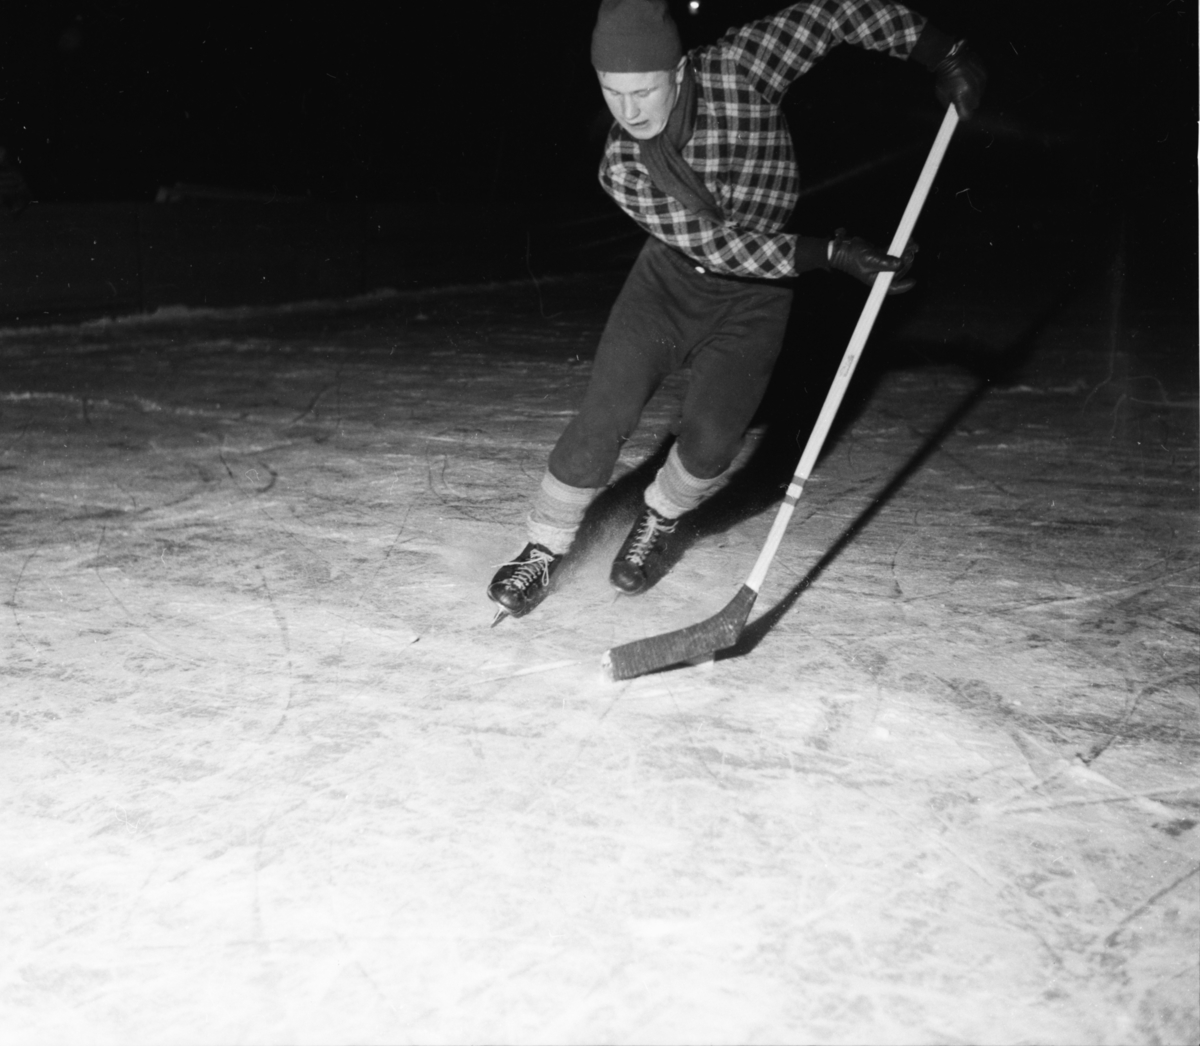 Vardens arkiv. "Ishockey trening på Sportsplassen"  26.01.1954